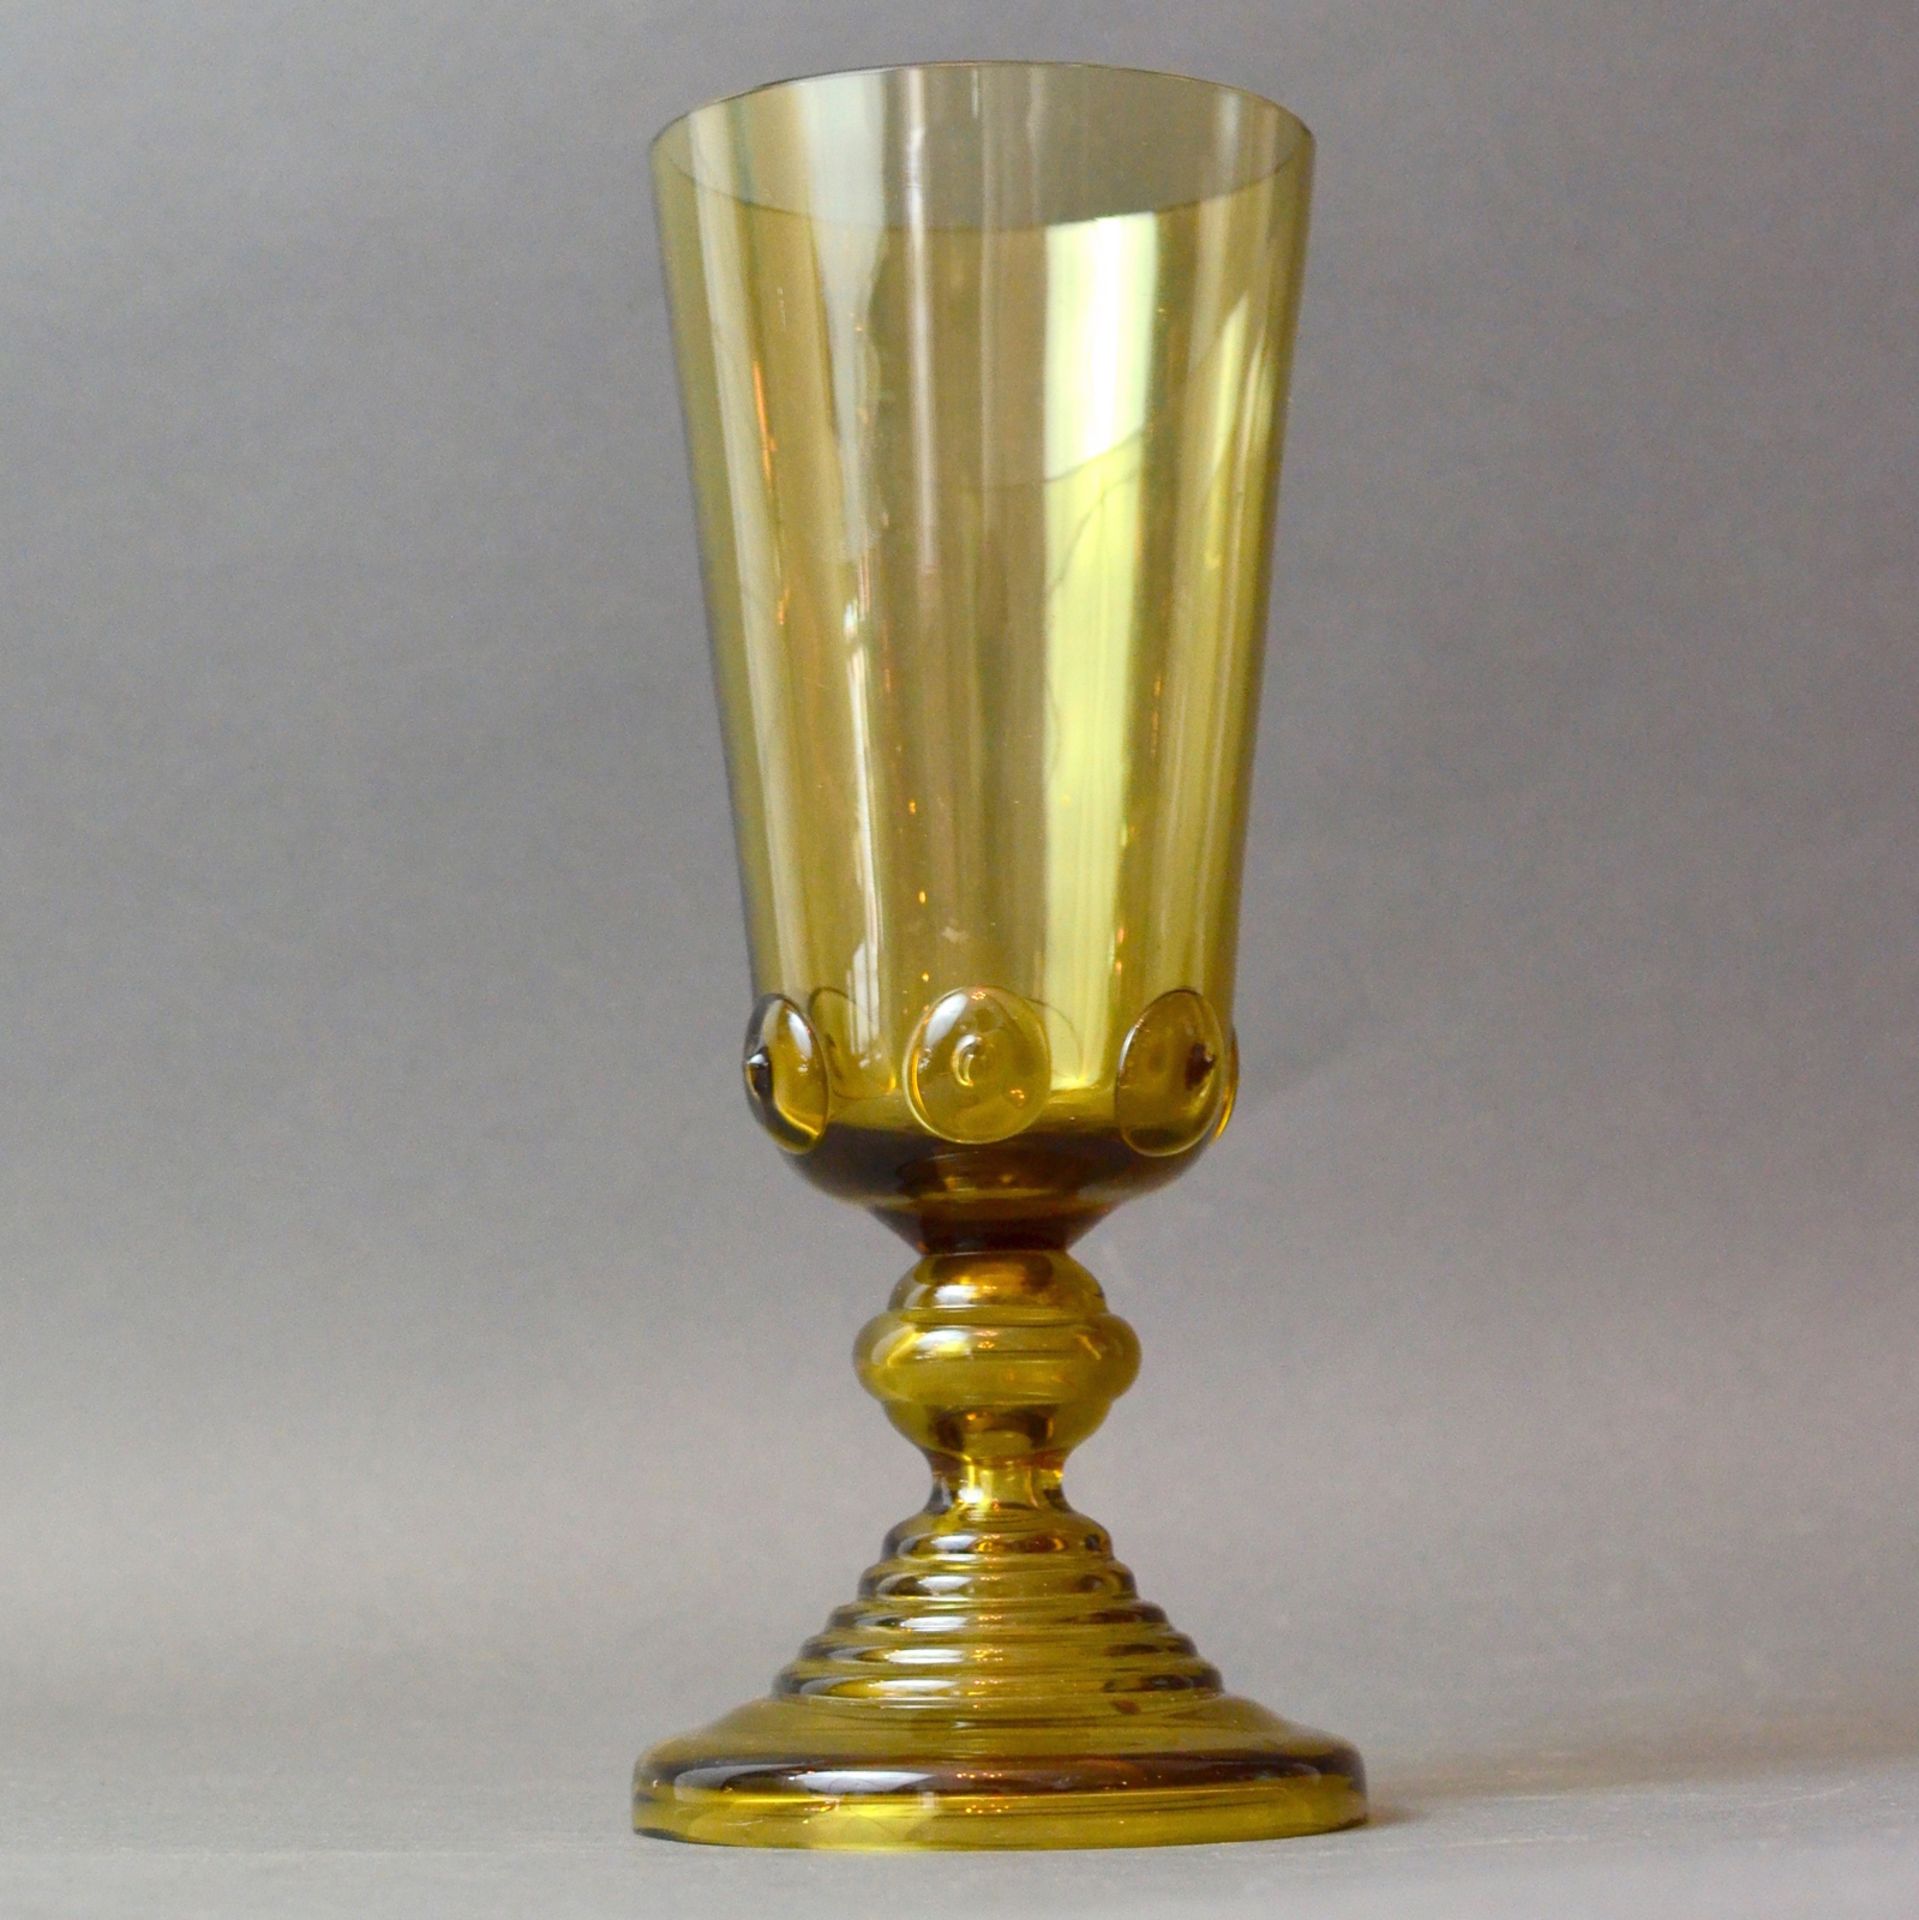 Großes Nuppen-Pokalglas mit Sockel, moosgrünes Glas mit aufgeschmolzenen Nuppen